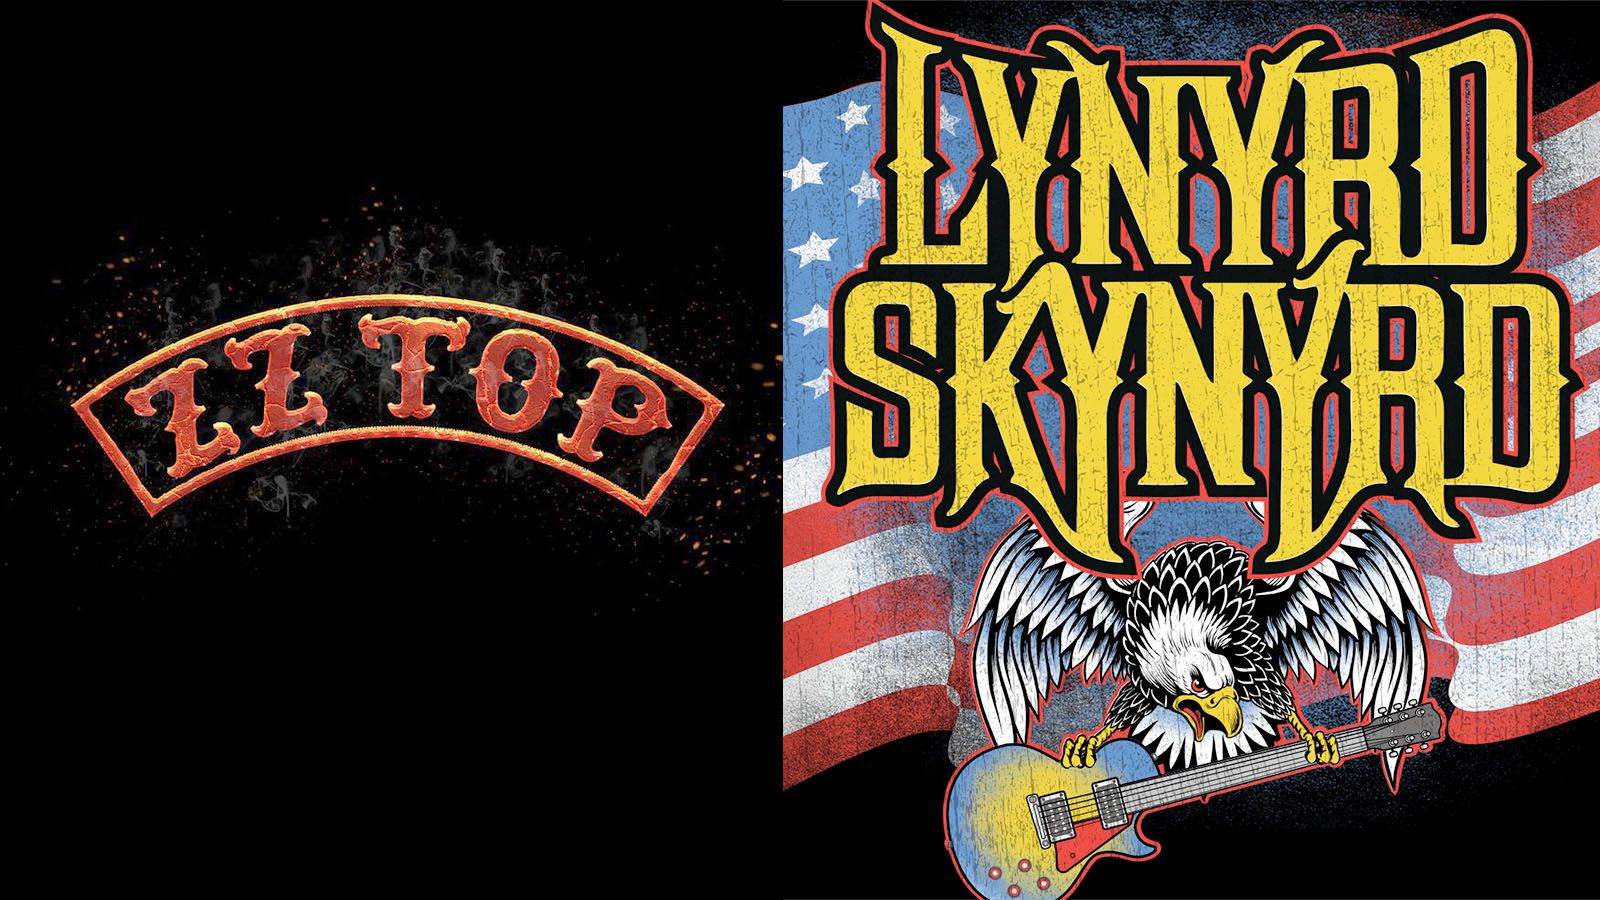 ZZ Top and Lynyrd Skynyrd are co-headlining a 2023 tour.